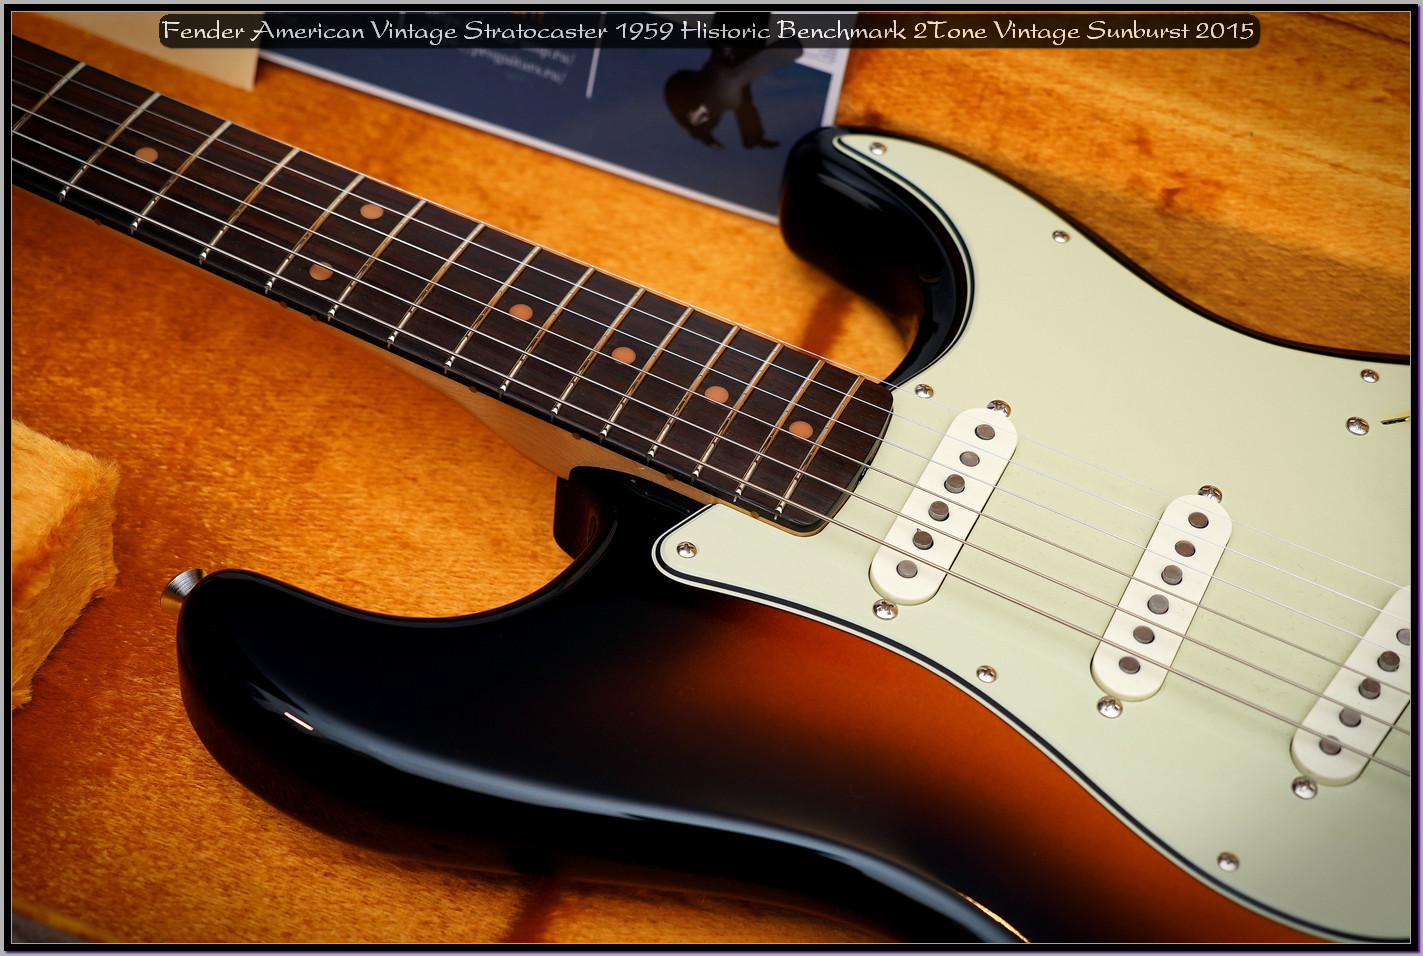 Fender American Vintage Stratocaster 1959 Historic Benchmark 2Tone Vintage Sunburst 2015 11_x1400.jpg